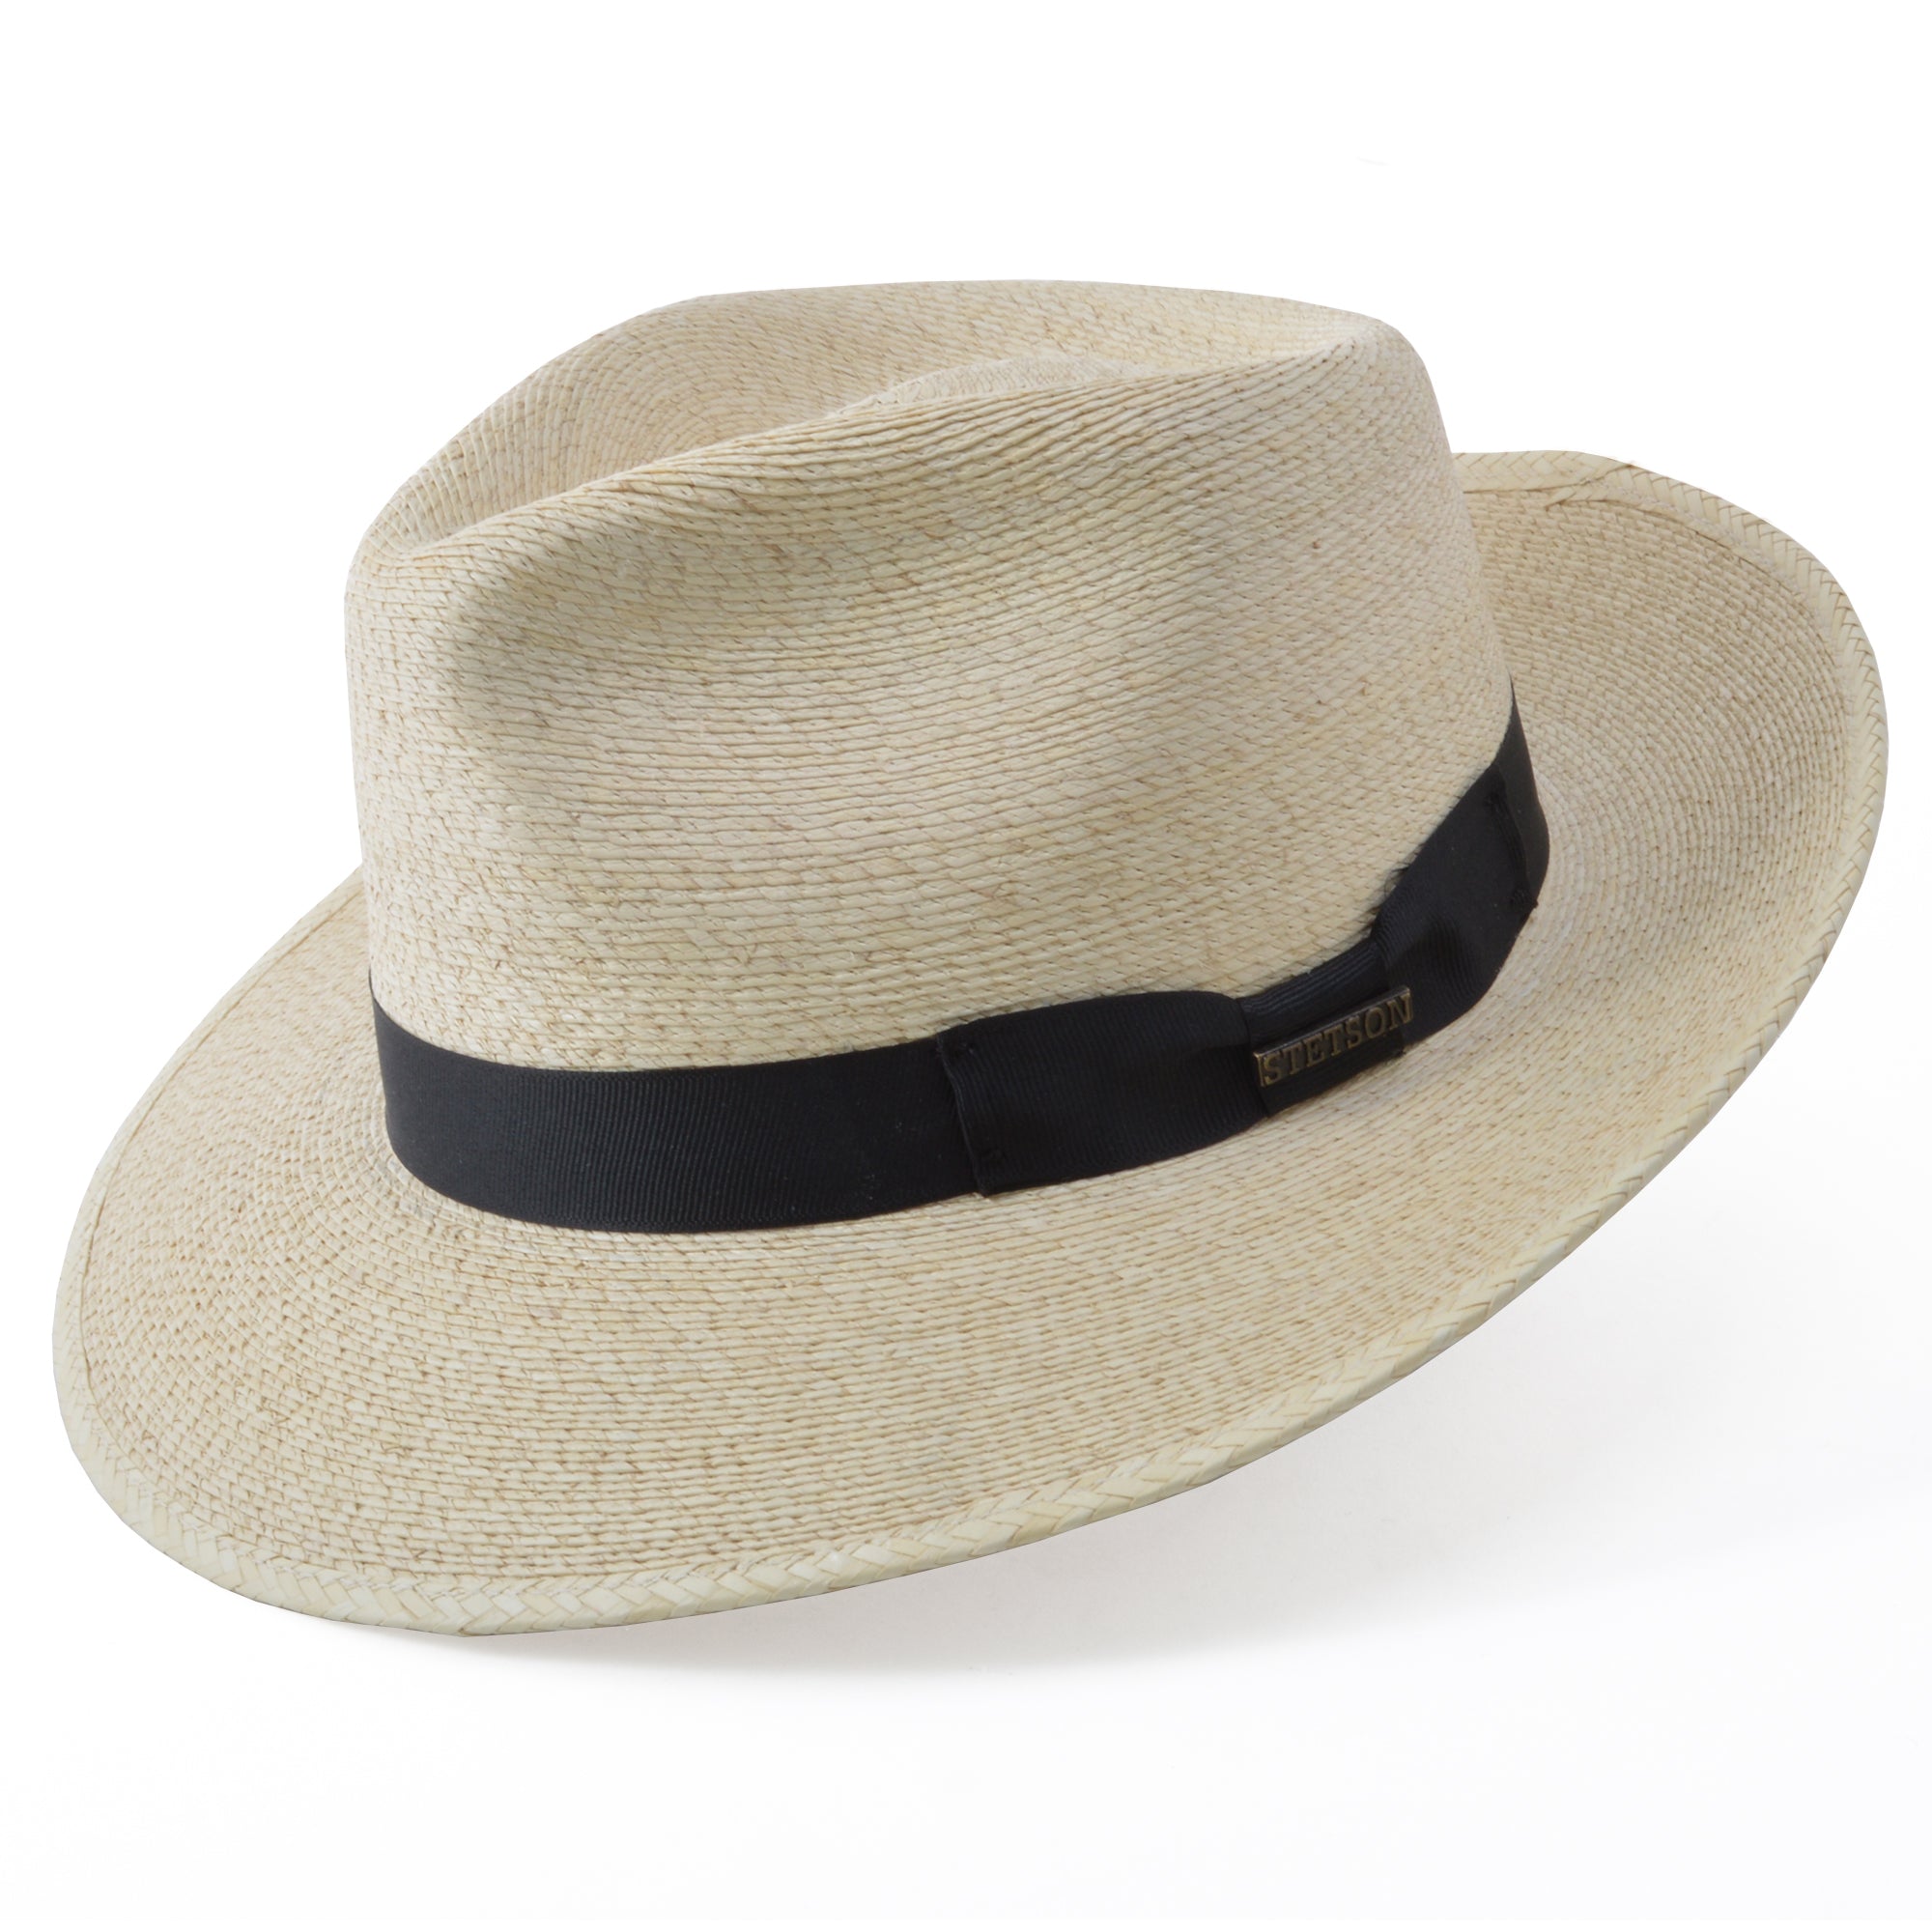 Stetson Rushmore Palm Straw Fedora Hat